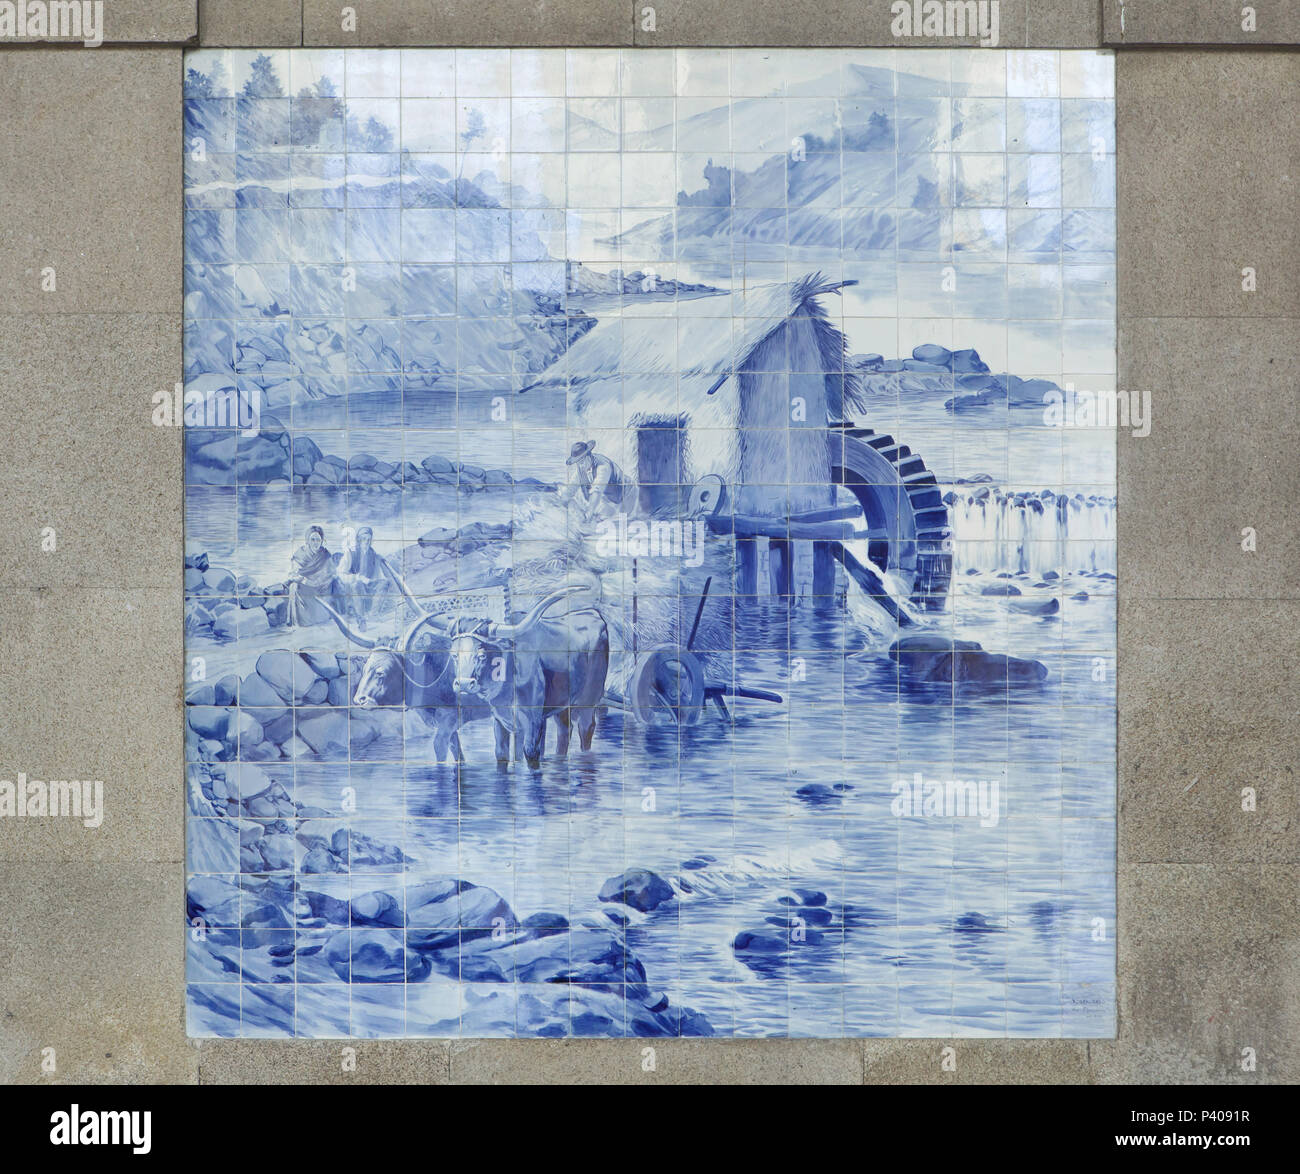 Work in the watermill depicted in the azulejo panel painted by Portuguese painter Jorge Colaço in 1905-1916 in the São Bento railway station (Estação Ferroviária de São Bento) in Porto, Portugal. Stock Photo